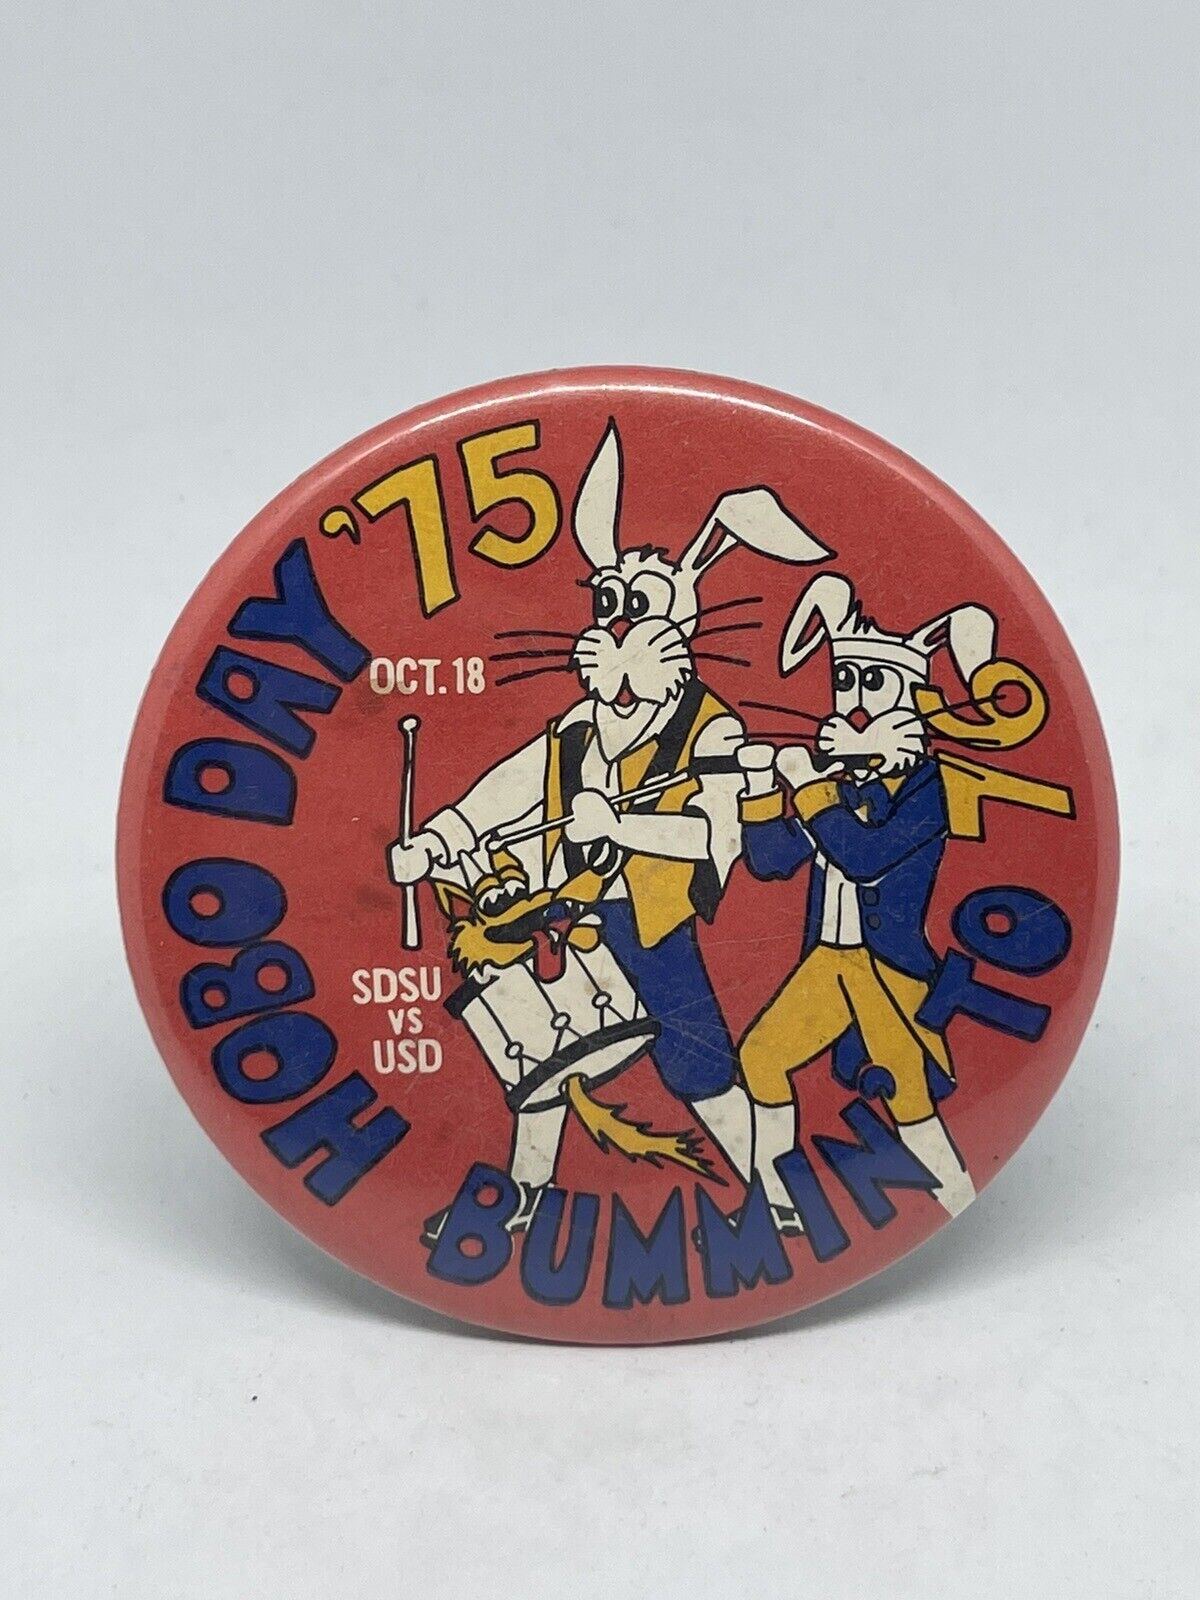 SDSU Oct. 18 1975 Hobo Day Pinback Button SDSU VS USD